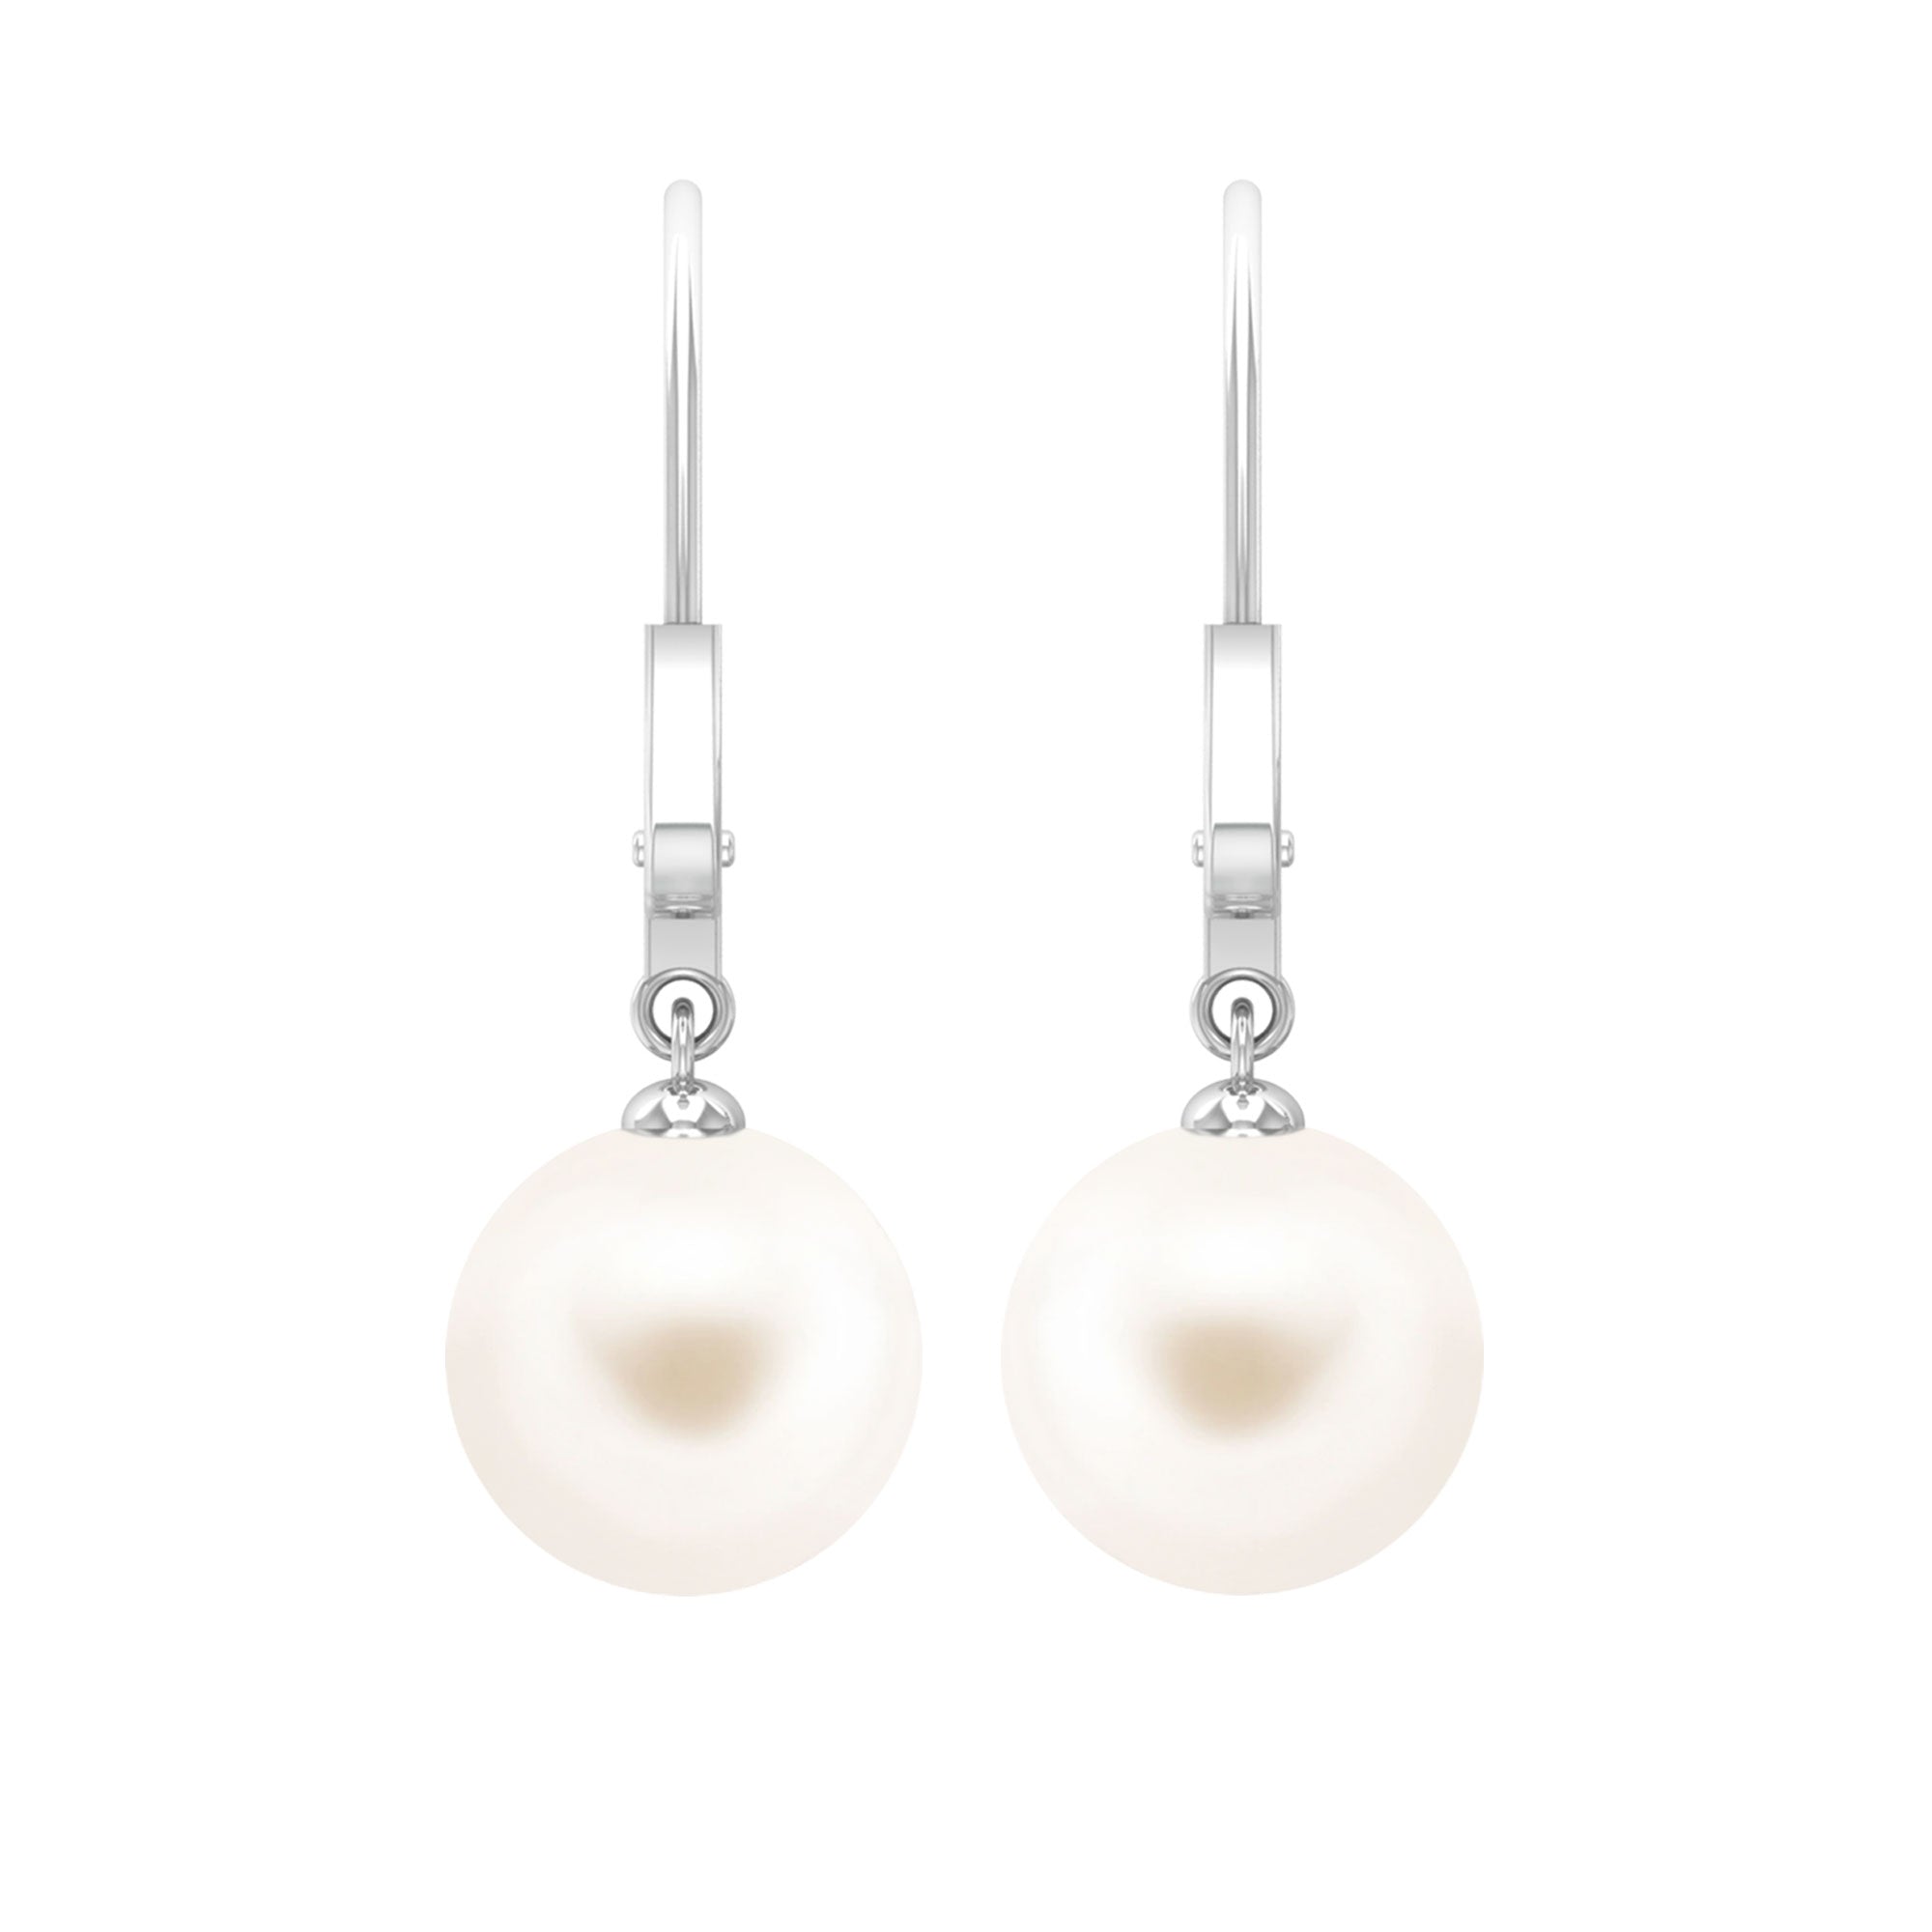 Arisha Jewels-White Pearl Drop Earrings with Lever Back Closure